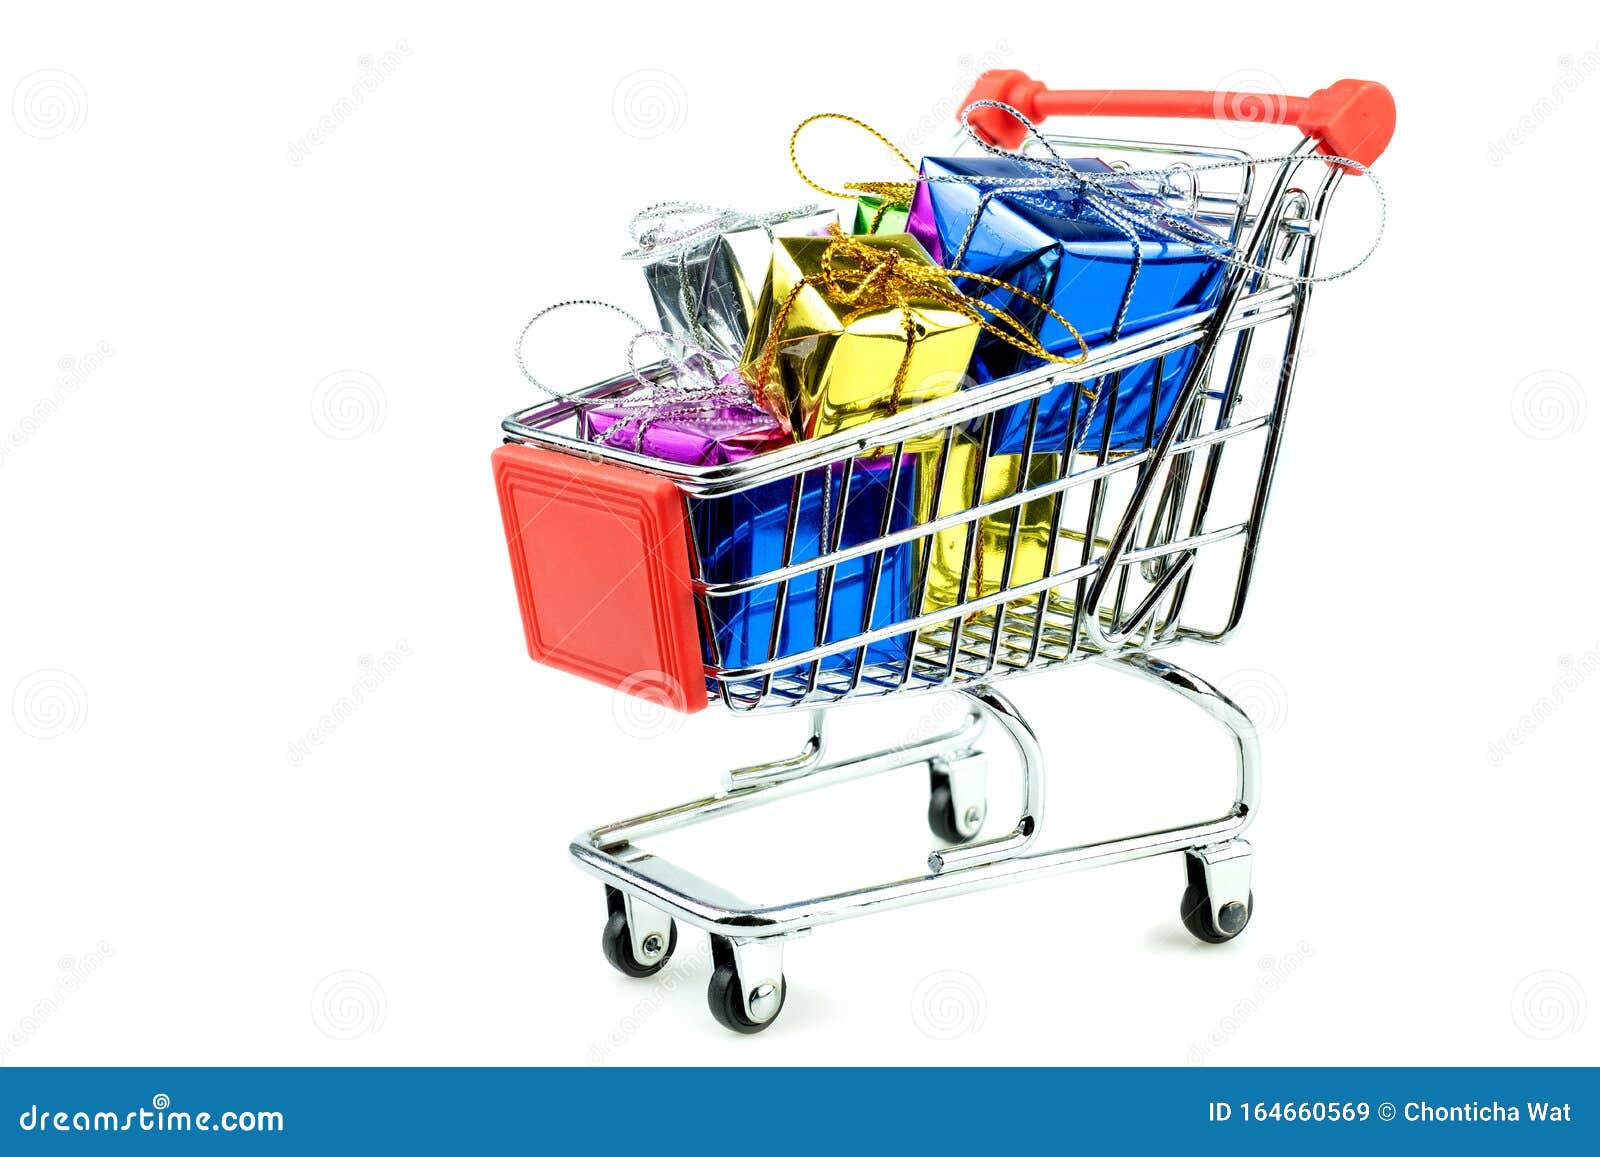 4 Wheel Shopping Trolley at Gift Box Stock Image Image gift, metal: 164660569